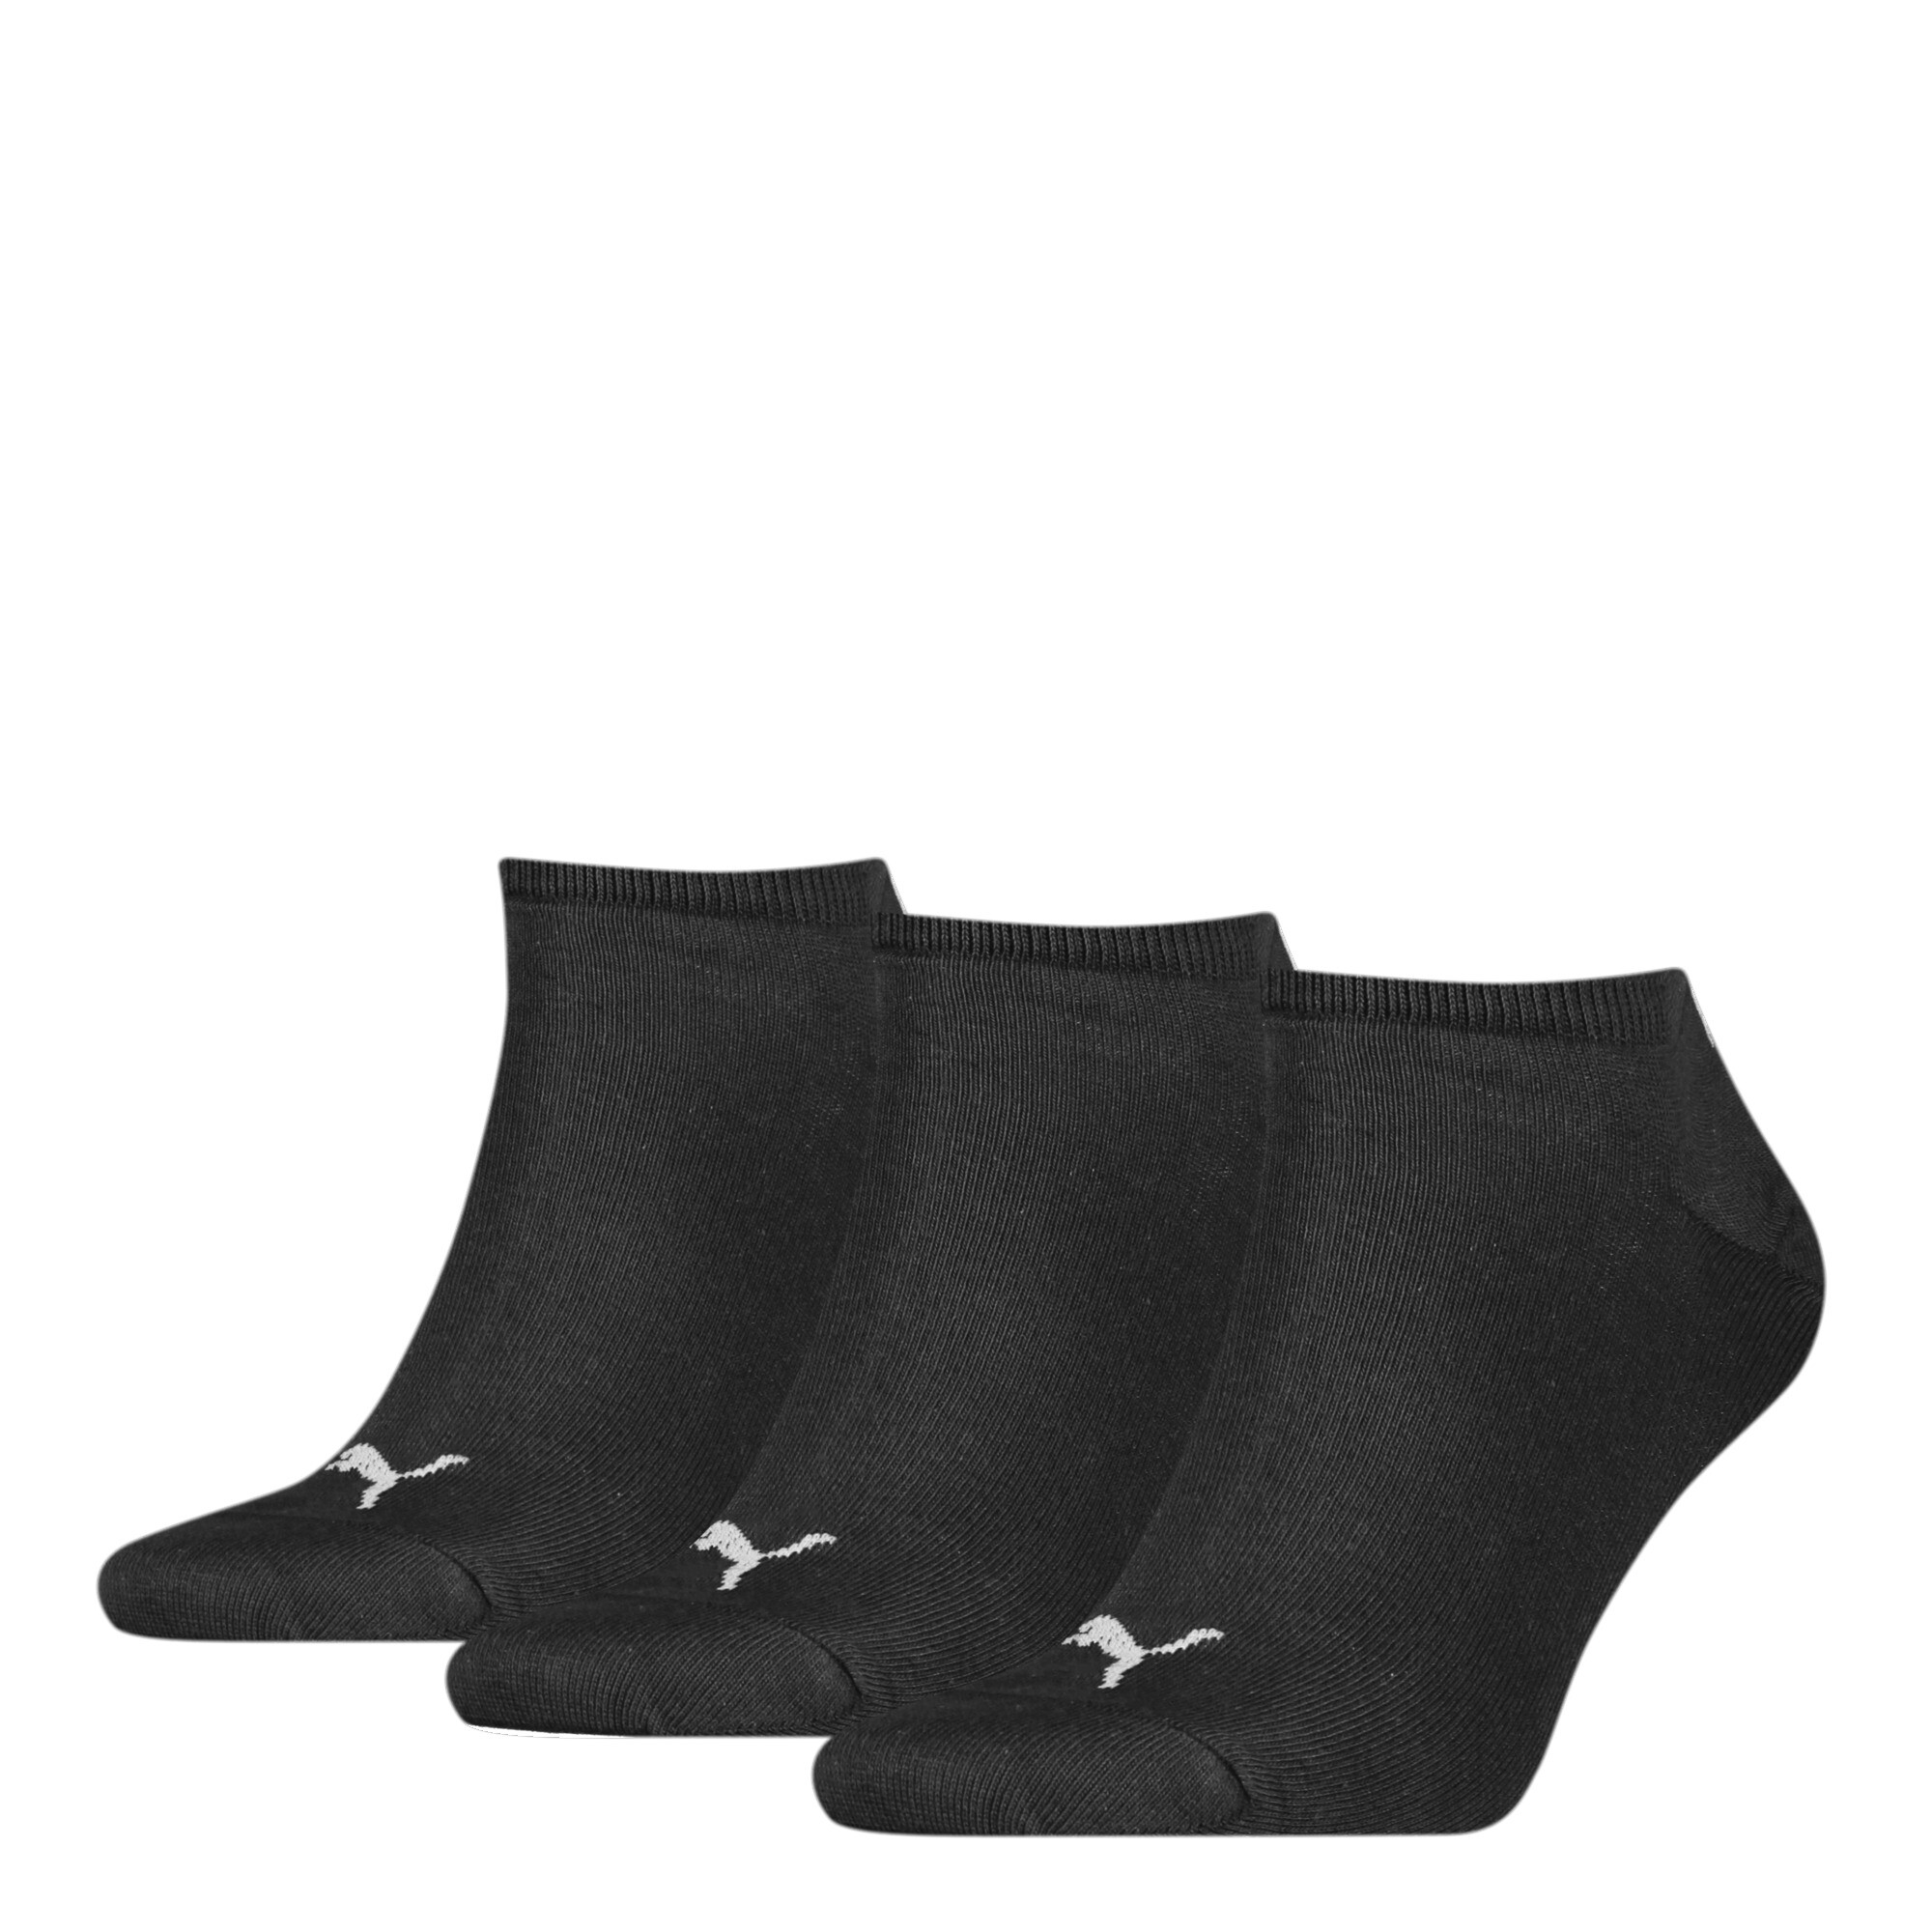 Unisex PUMA Plain Sneaker Trainer Socks 3 Pack In Black, Size 39-42